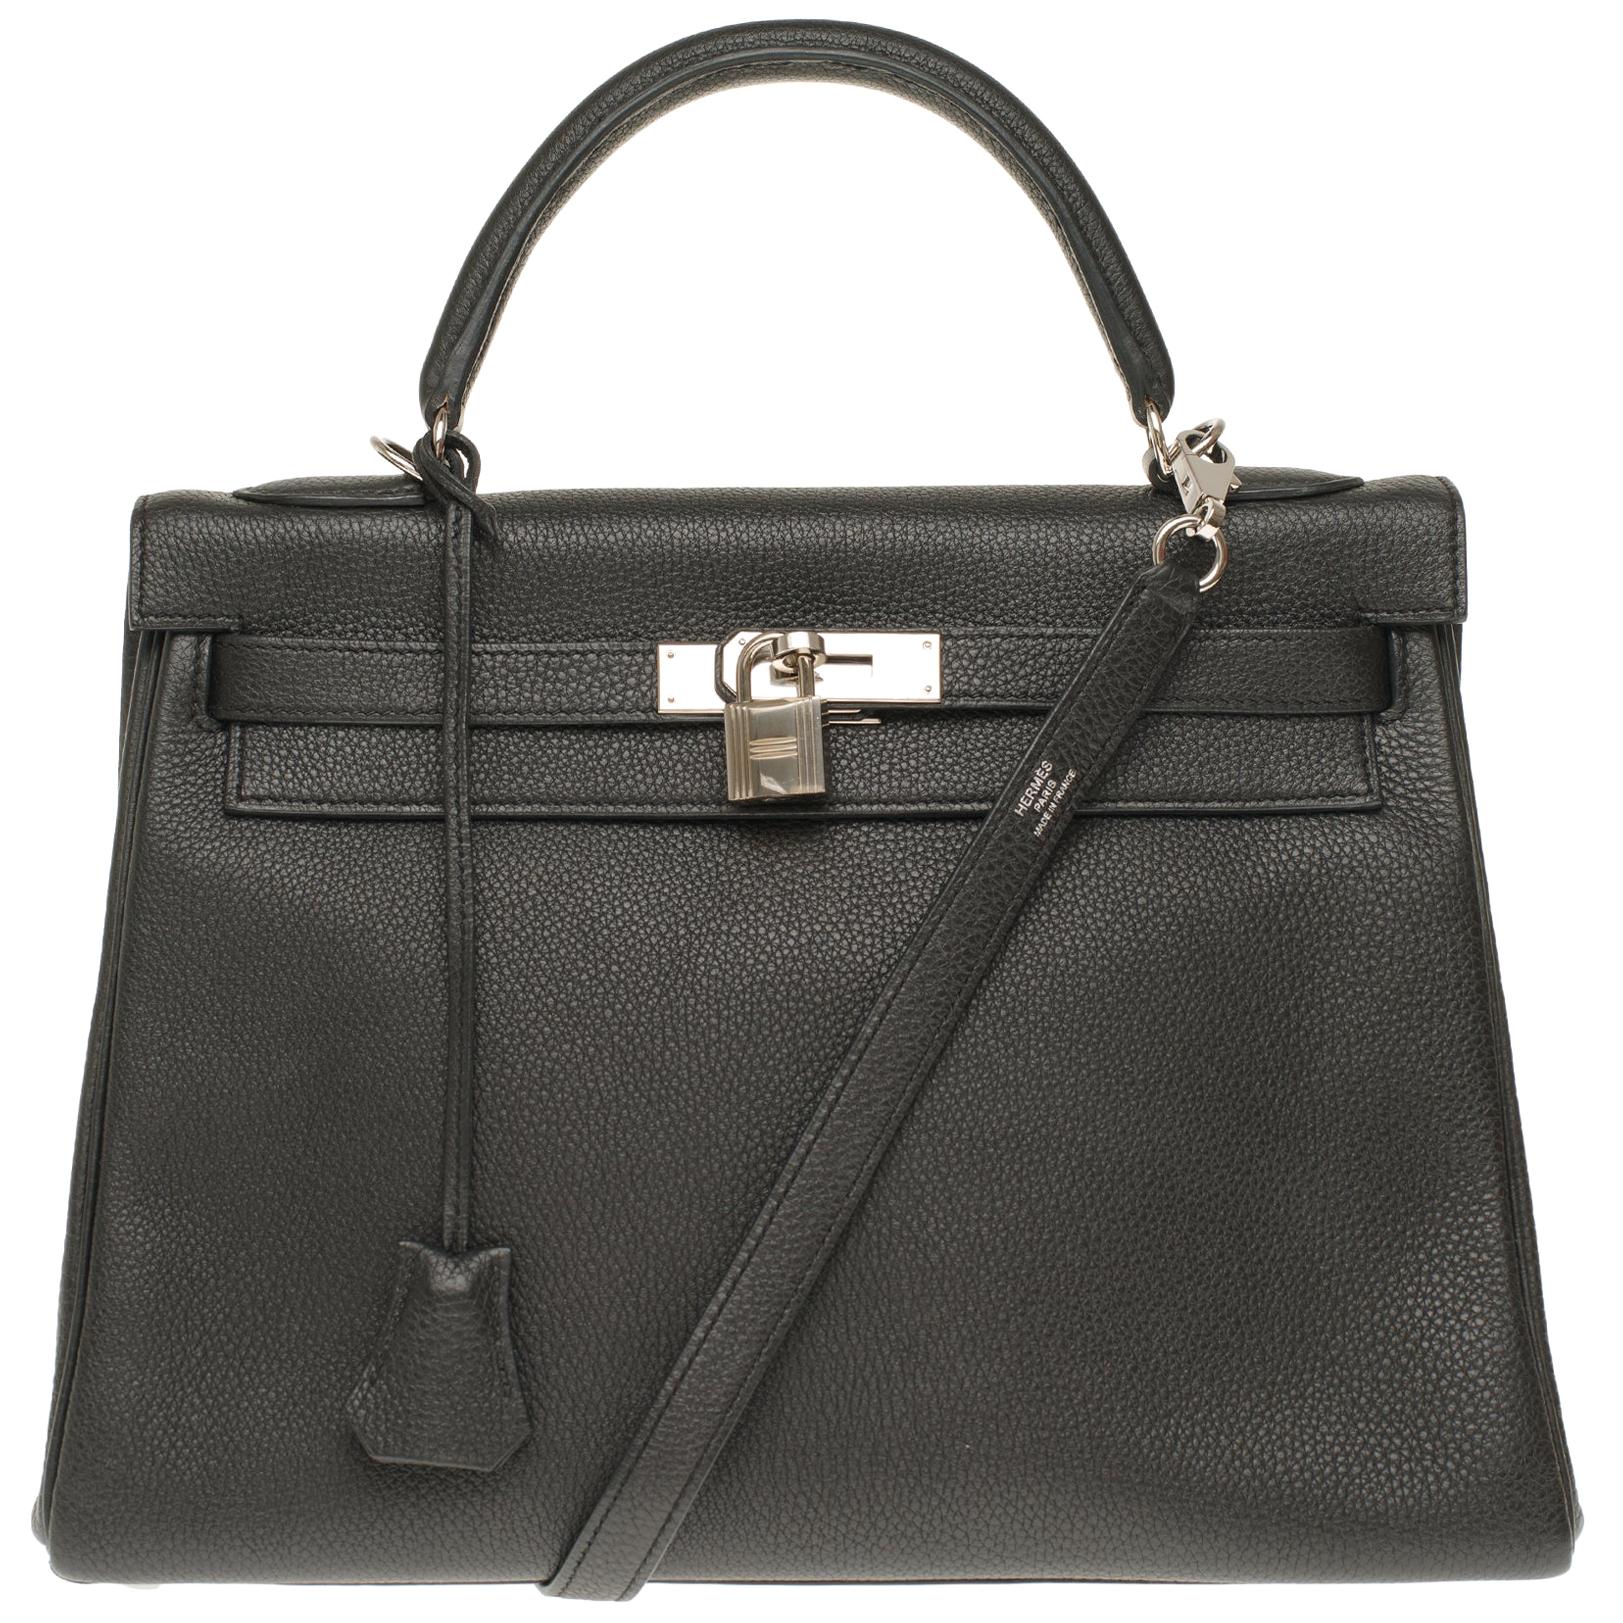 Hermès Kelly 32cm handbag with strap in black togo leather, silver hardware!